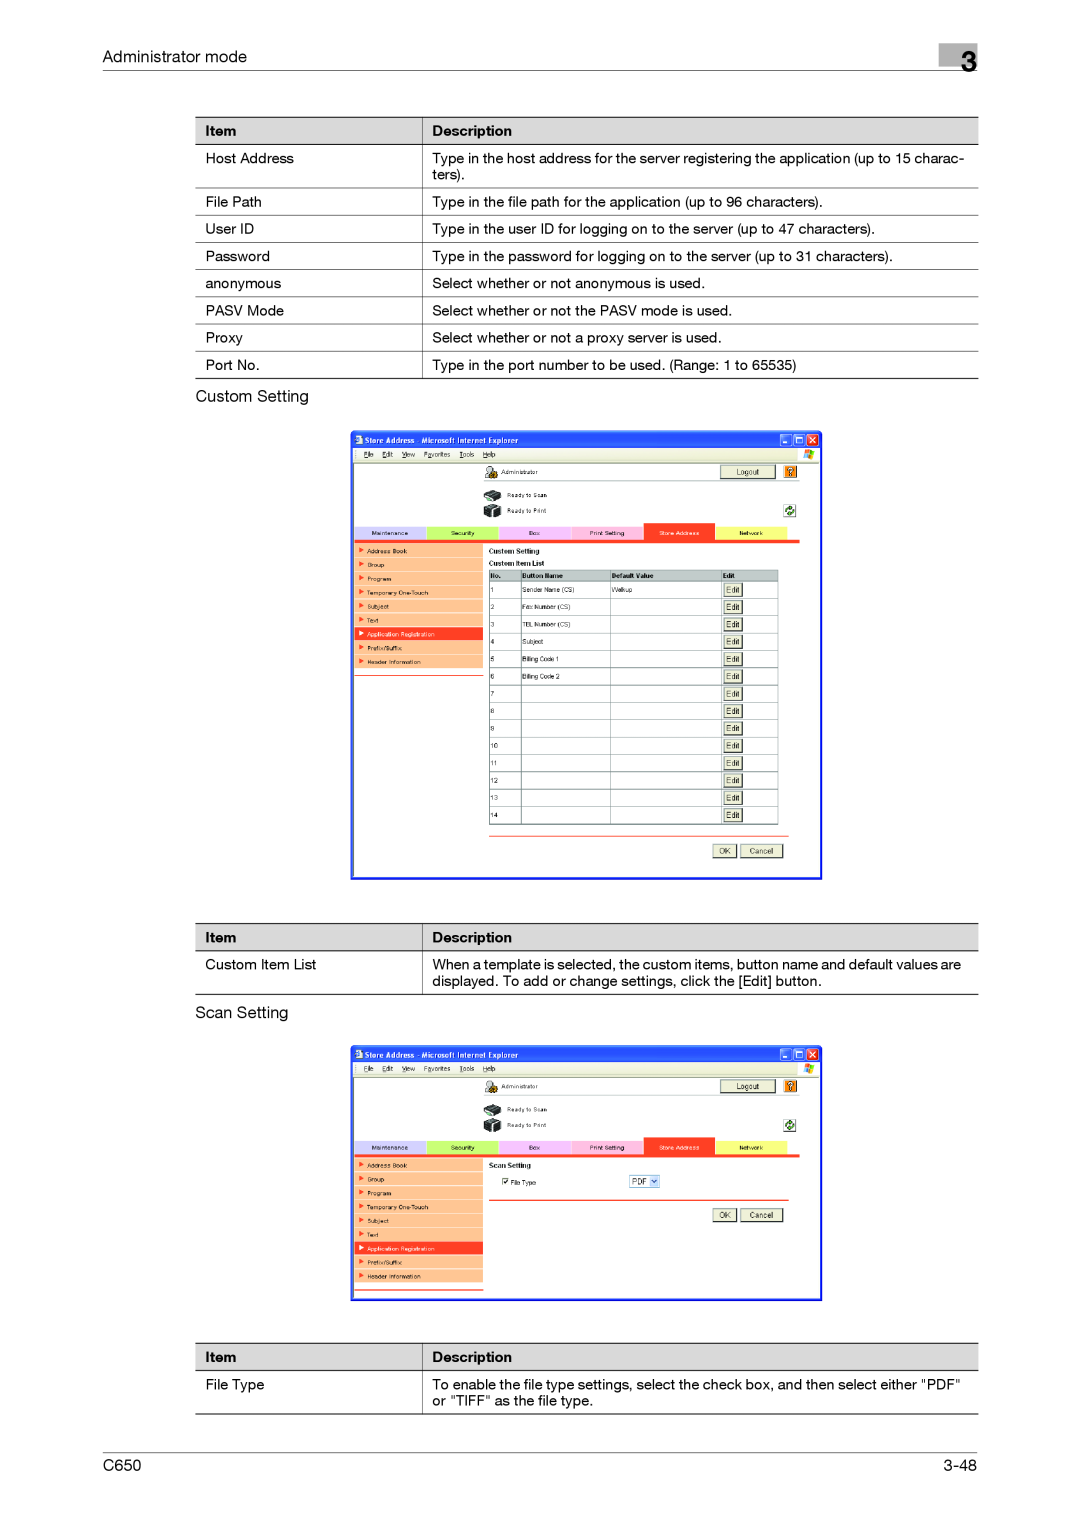 Konica Minolta C650 manual Custom Setting, Scan Setting, 3-48, Administrator mode 